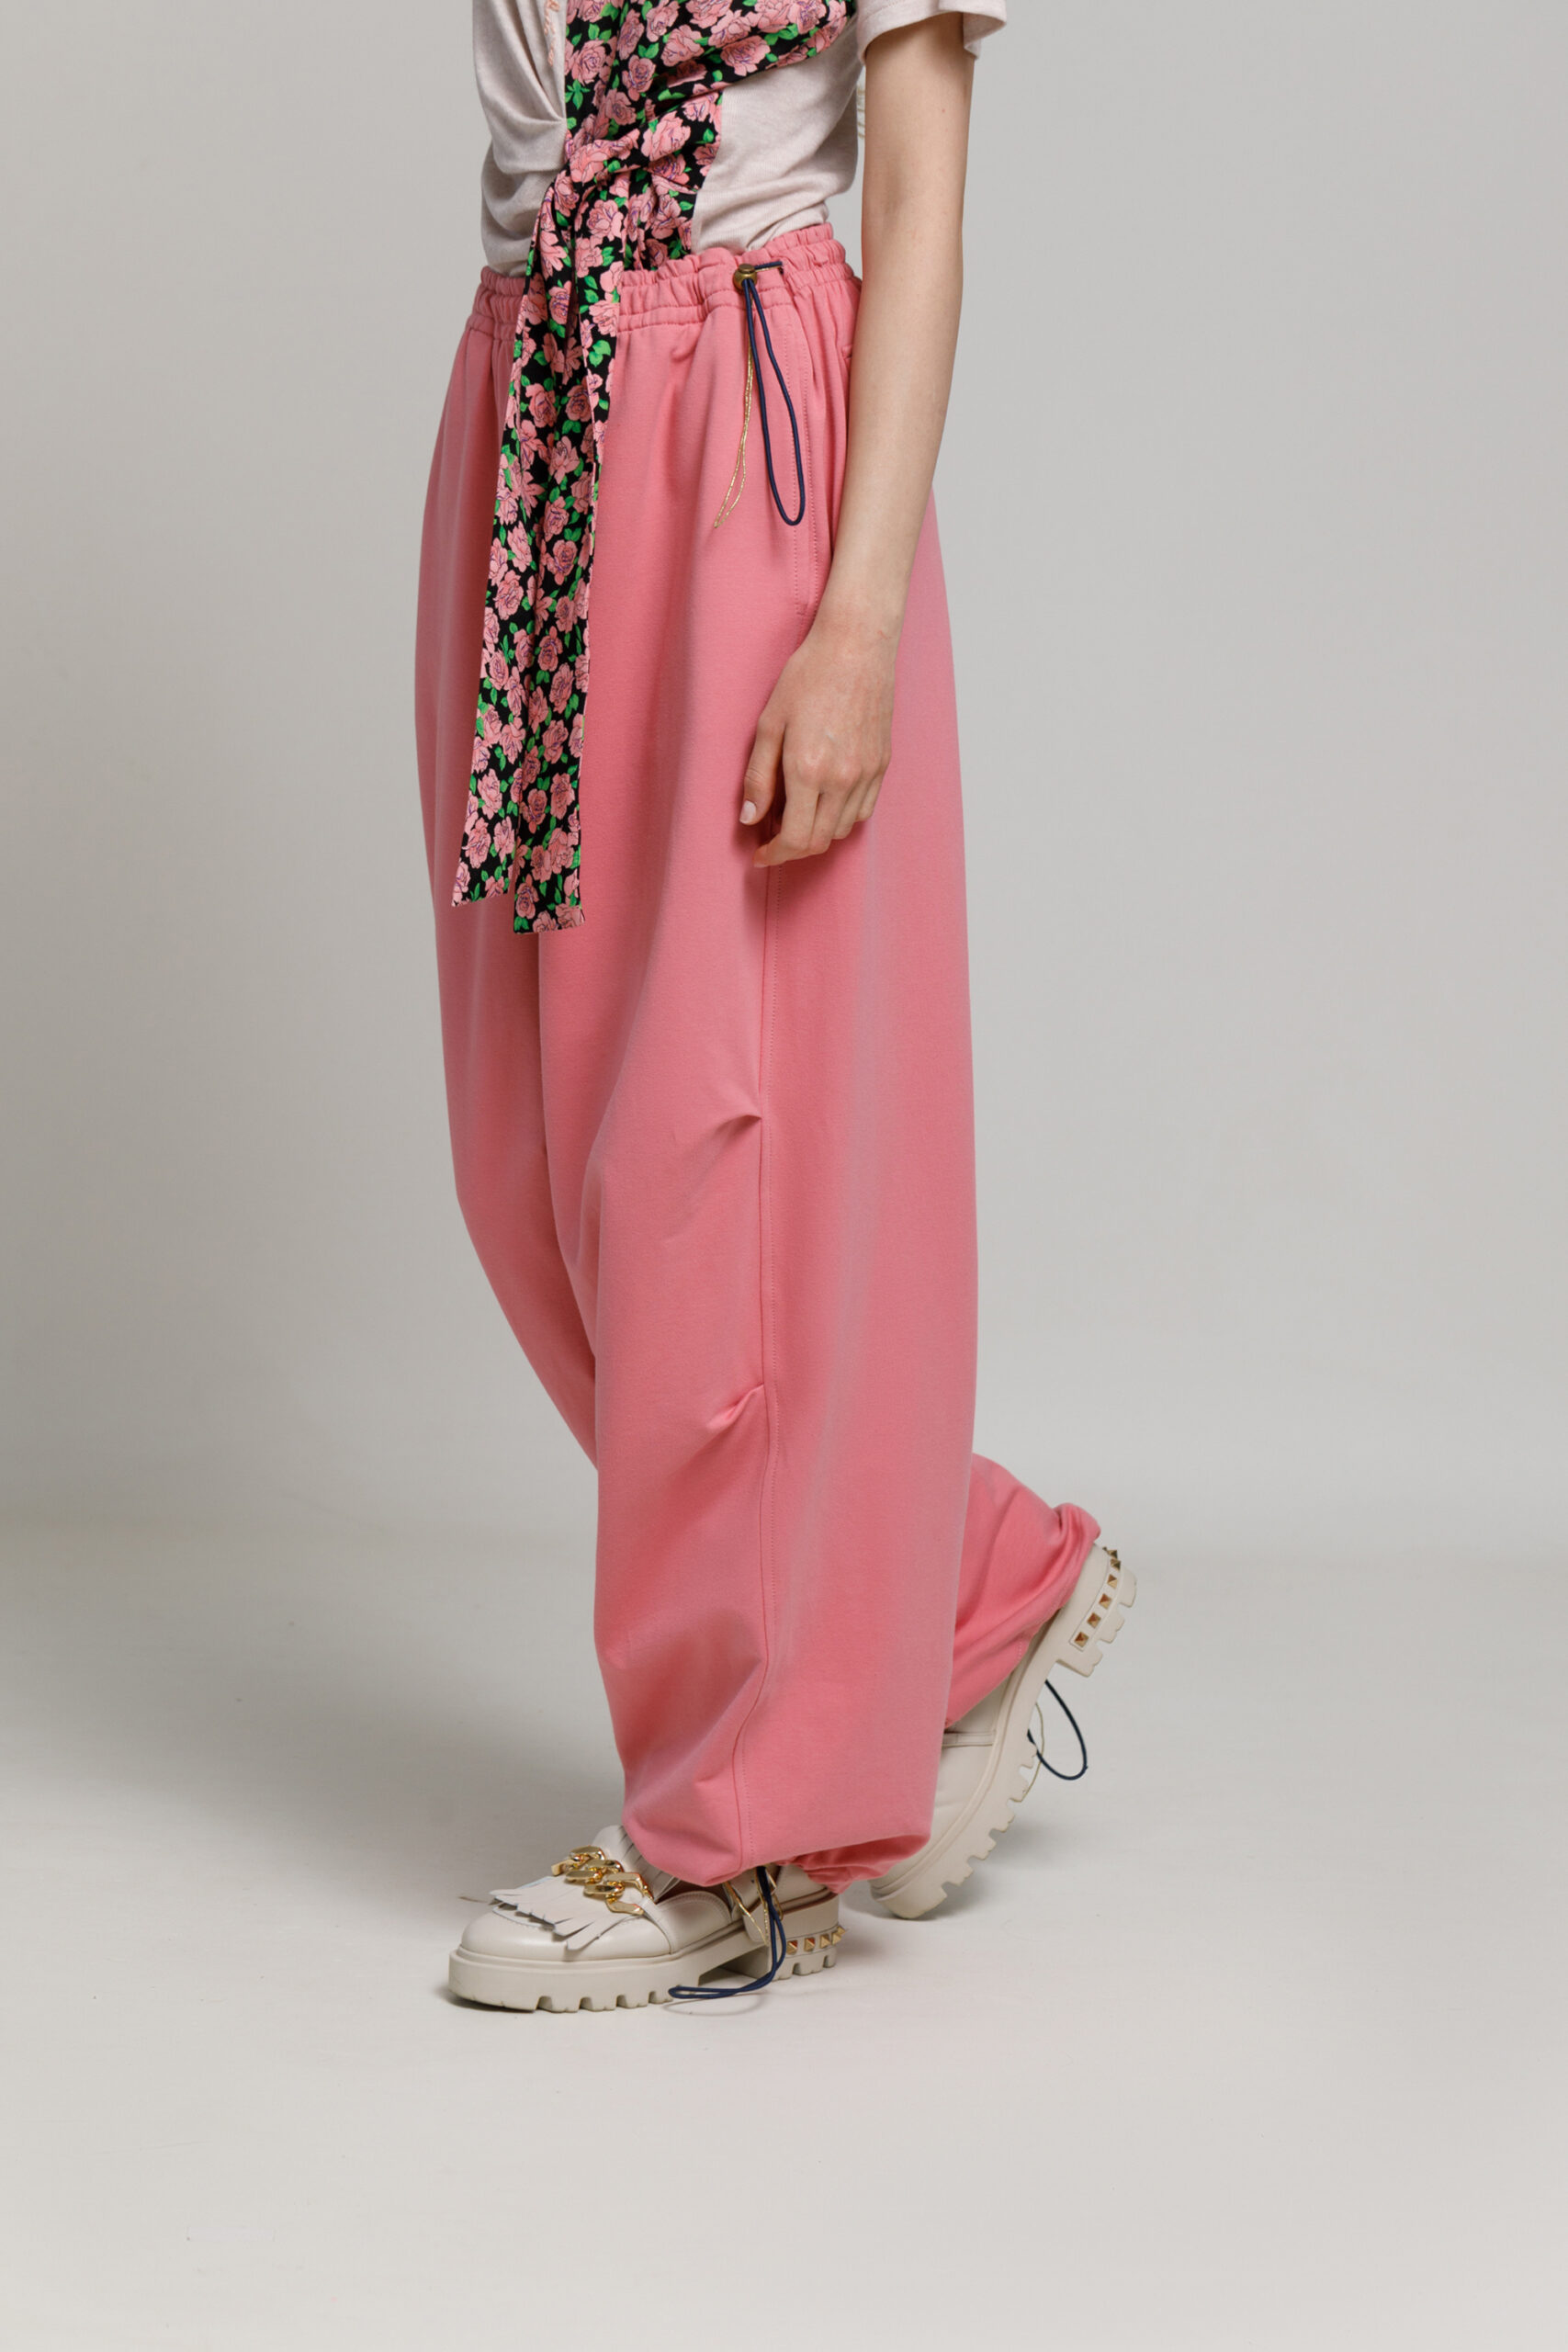 Pantalon  WAN roz din felpa. Materiale naturale, design unicat, cu broderie si aplicatii handmade